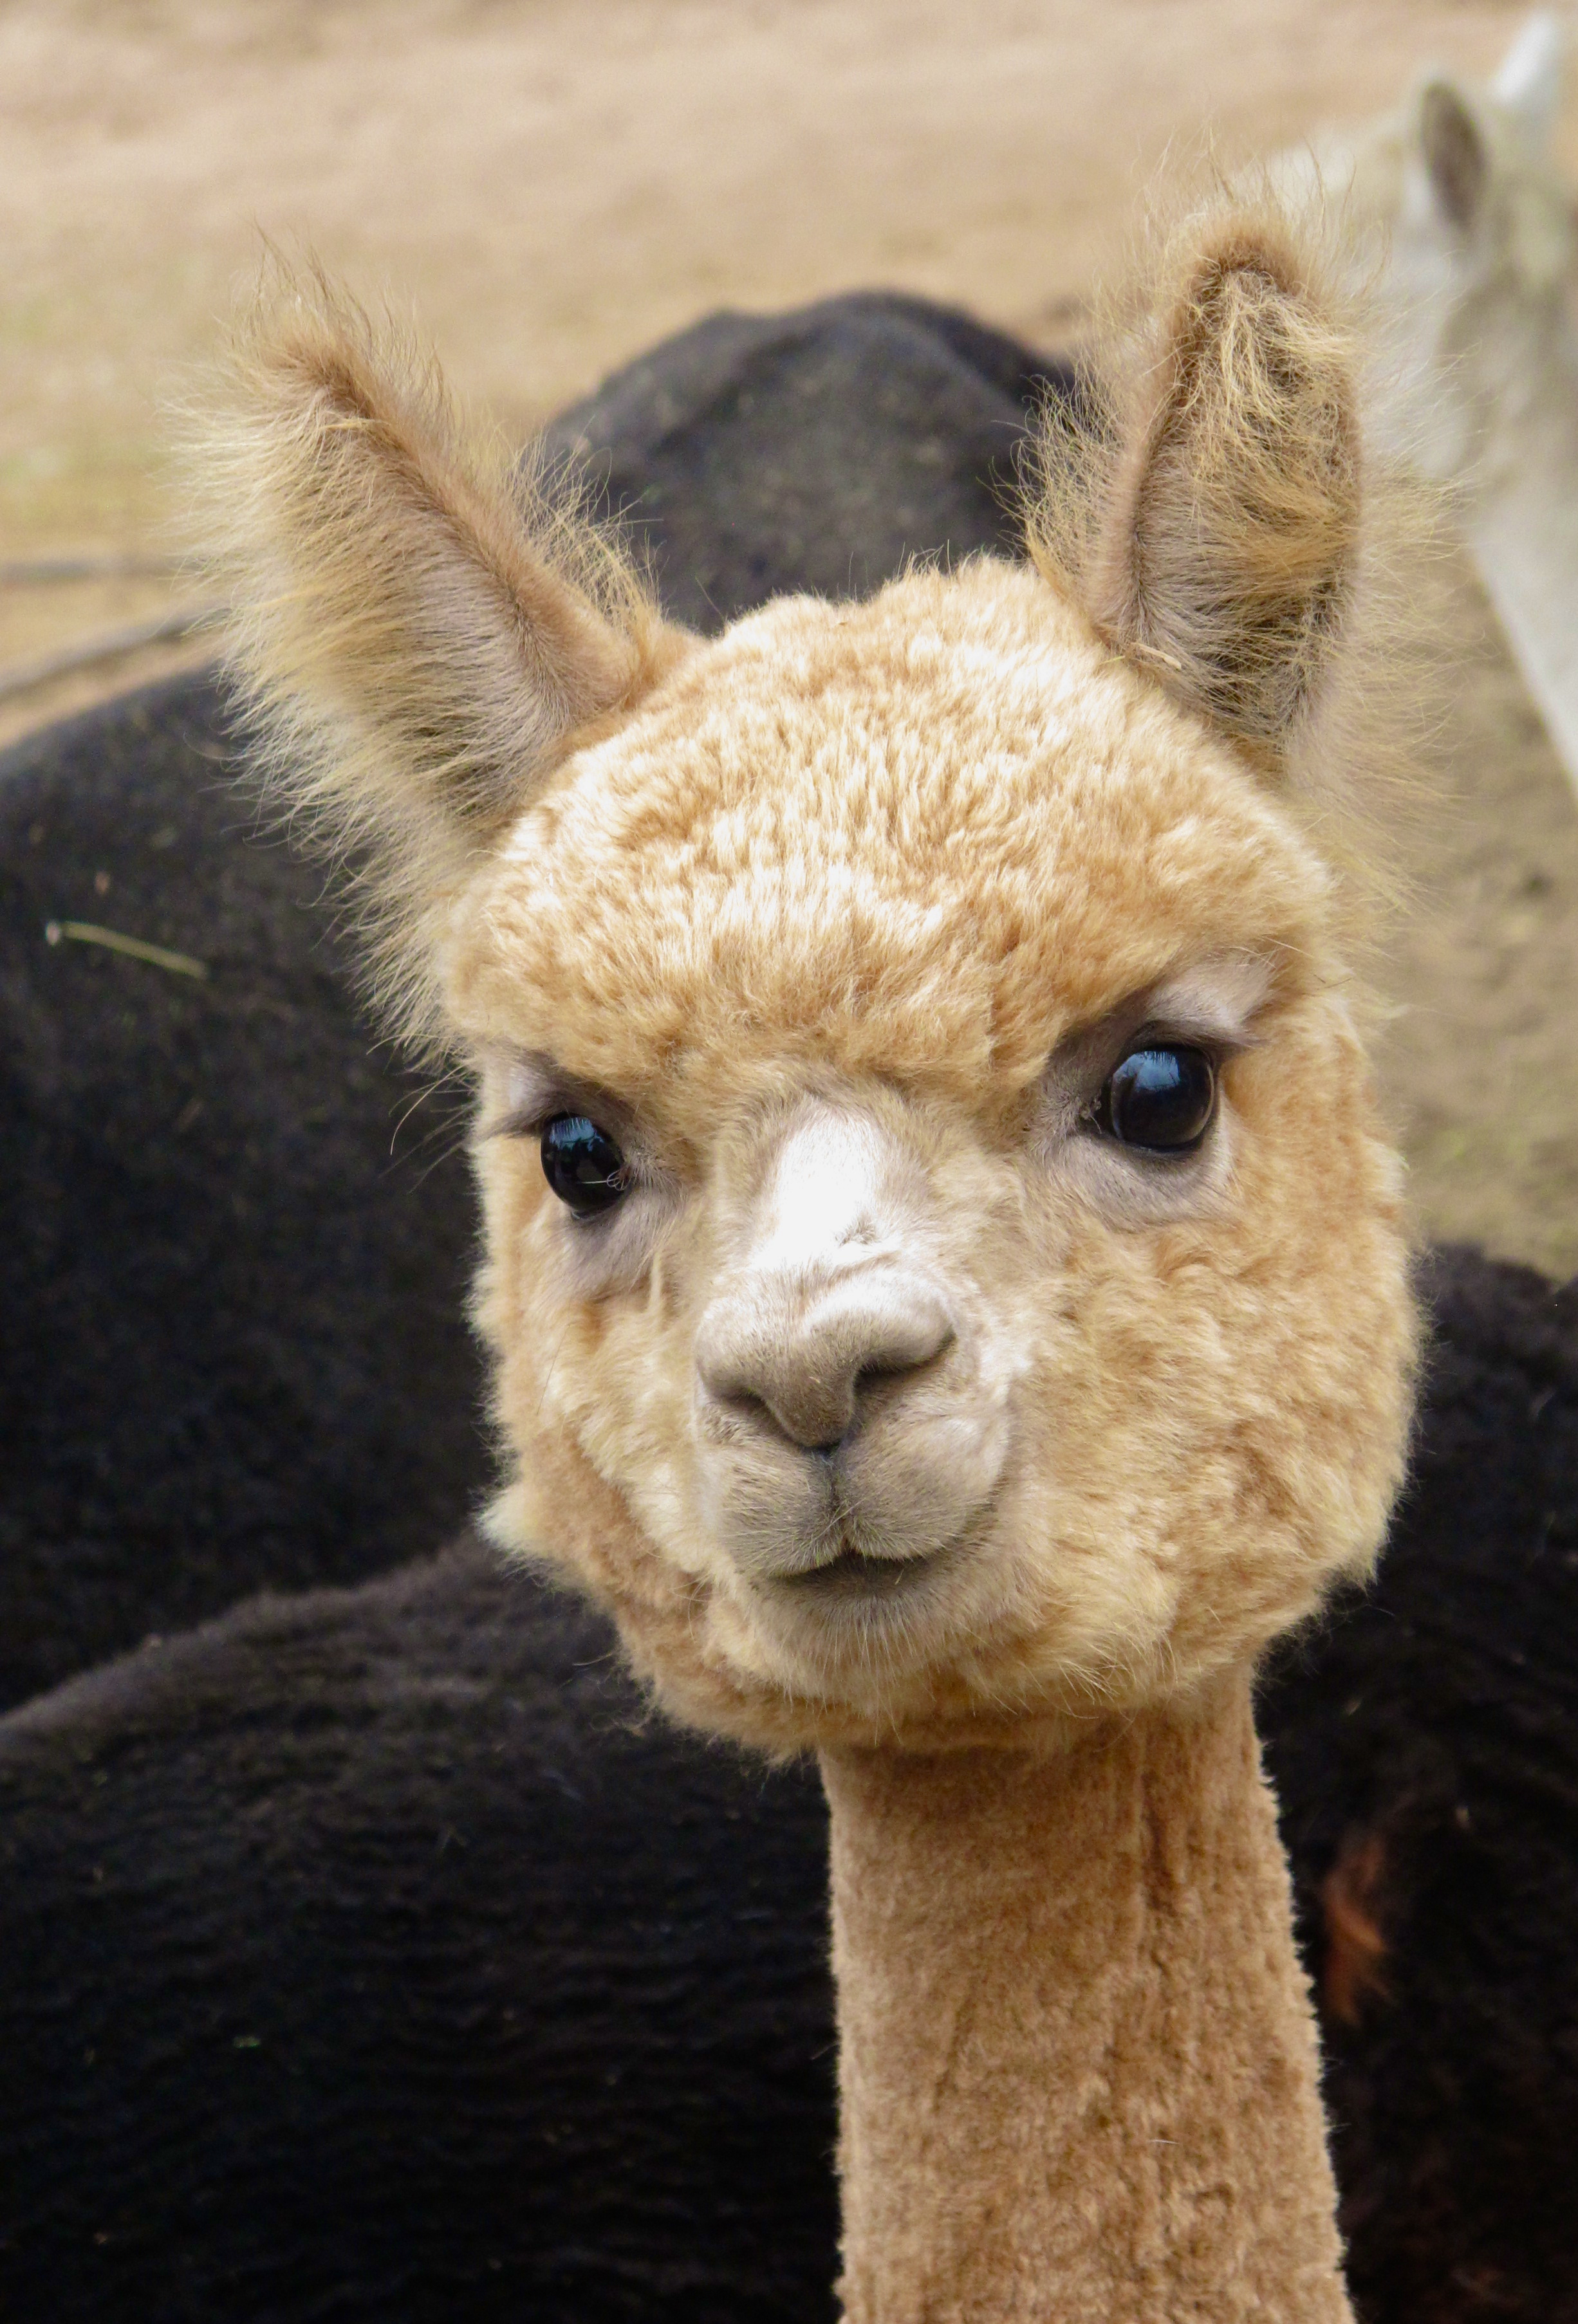 Sunday Snapshots: Lovely Llamas and Adorable Alpacas - The Silver Pen